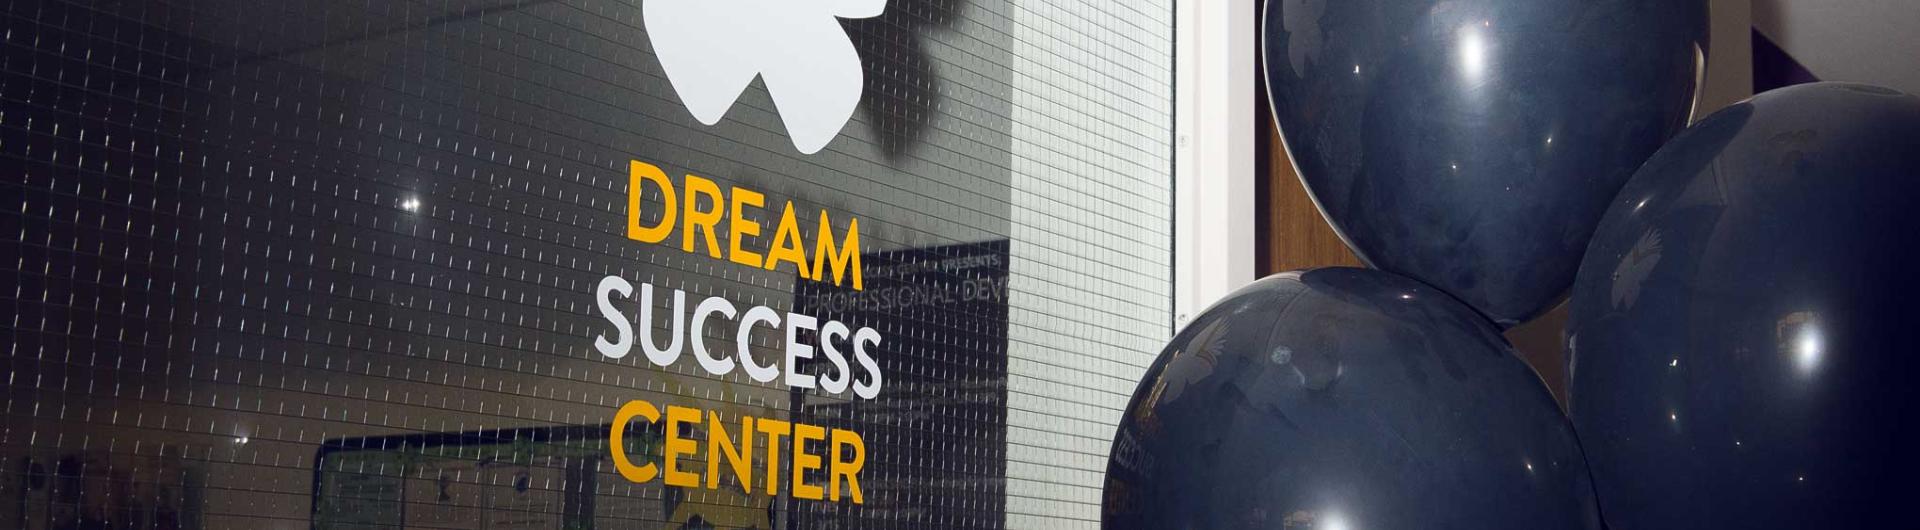 Dream Success Center